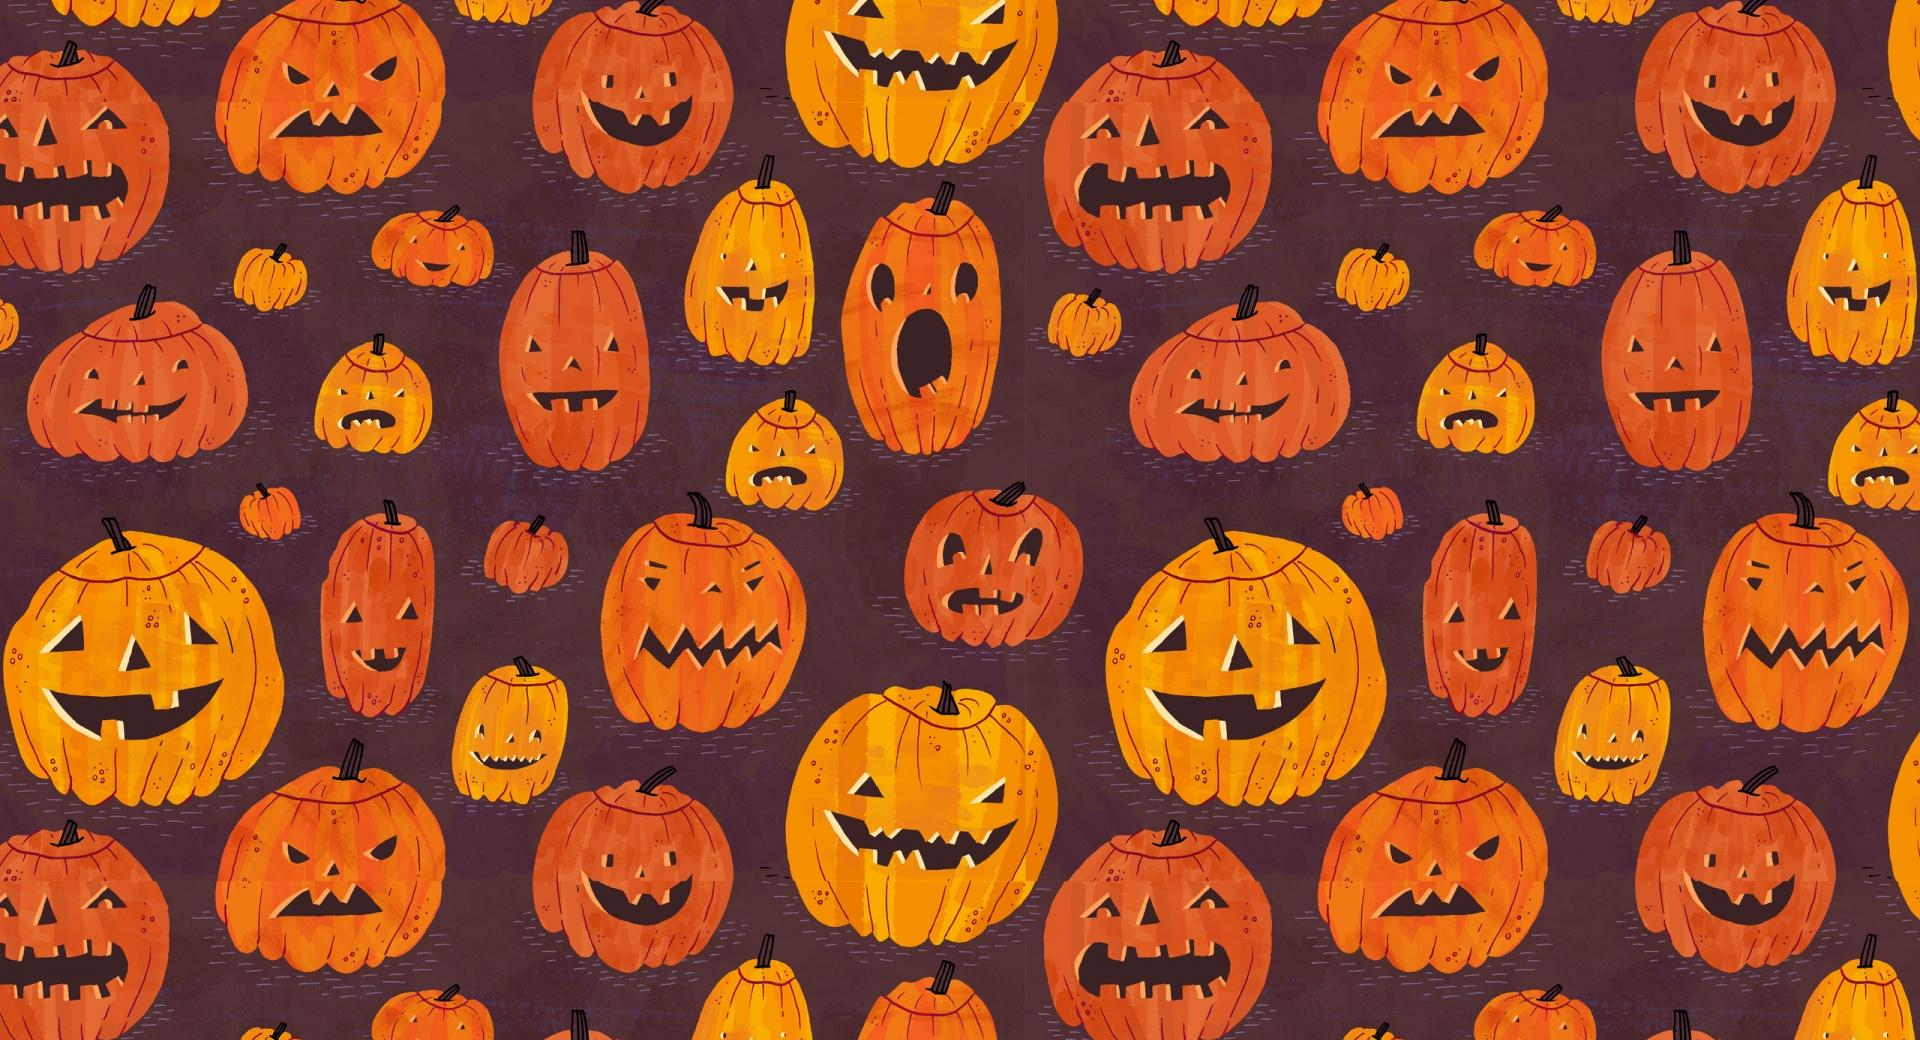 Halloween Pumpkins Pattern at 2048 x 2048 iPad size wallpapers HD quality